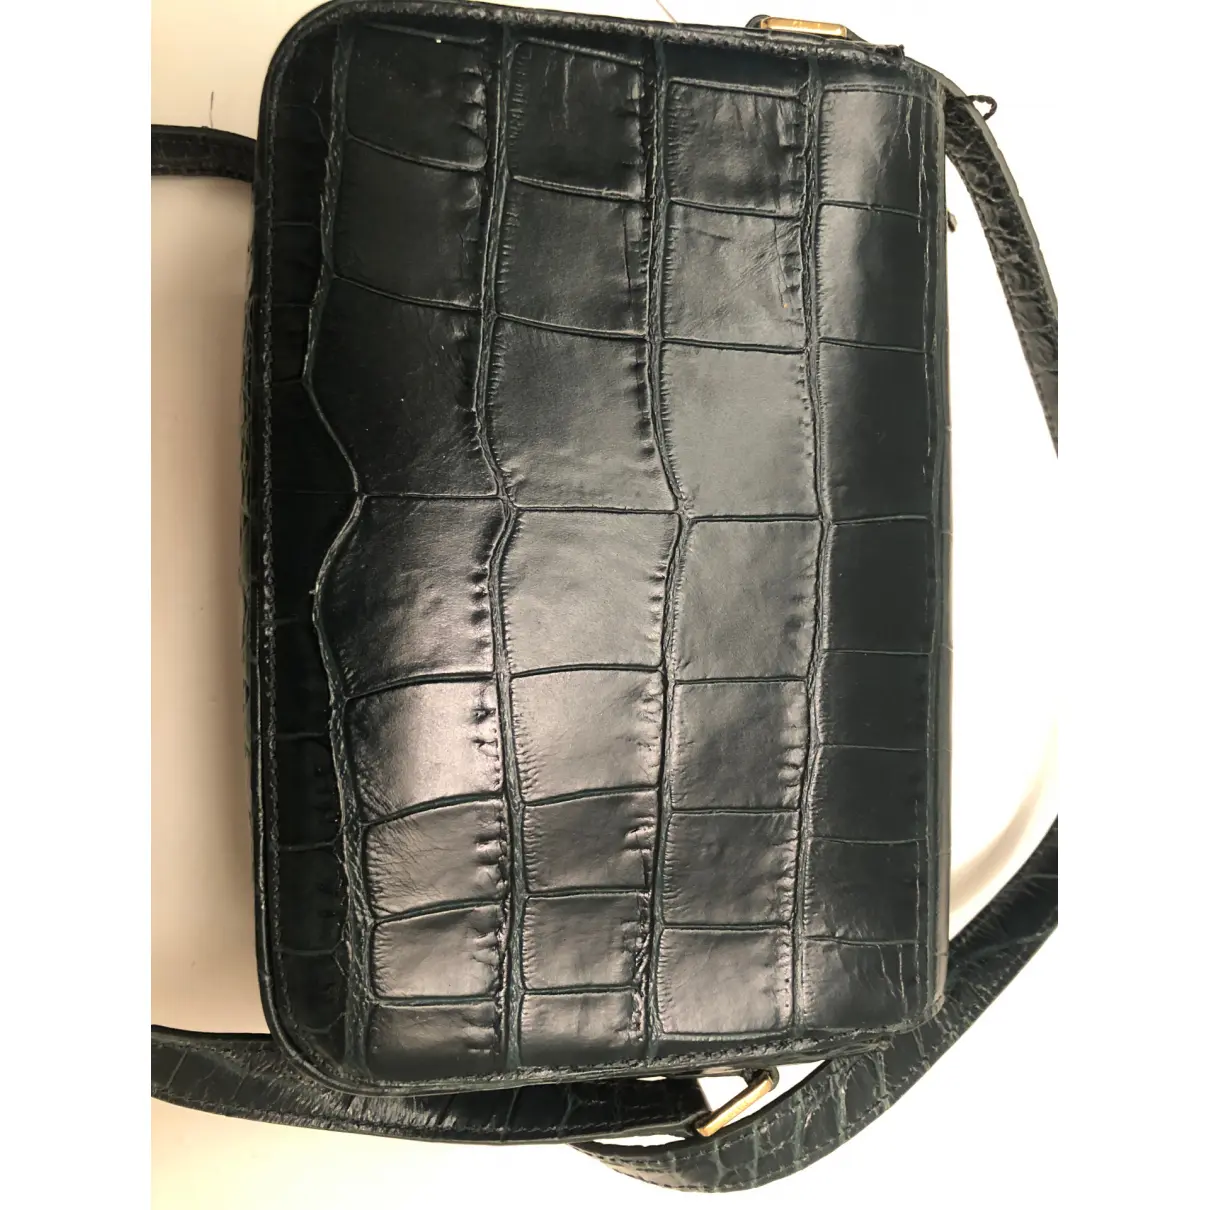 Buy Celine Tassels leather handbag online